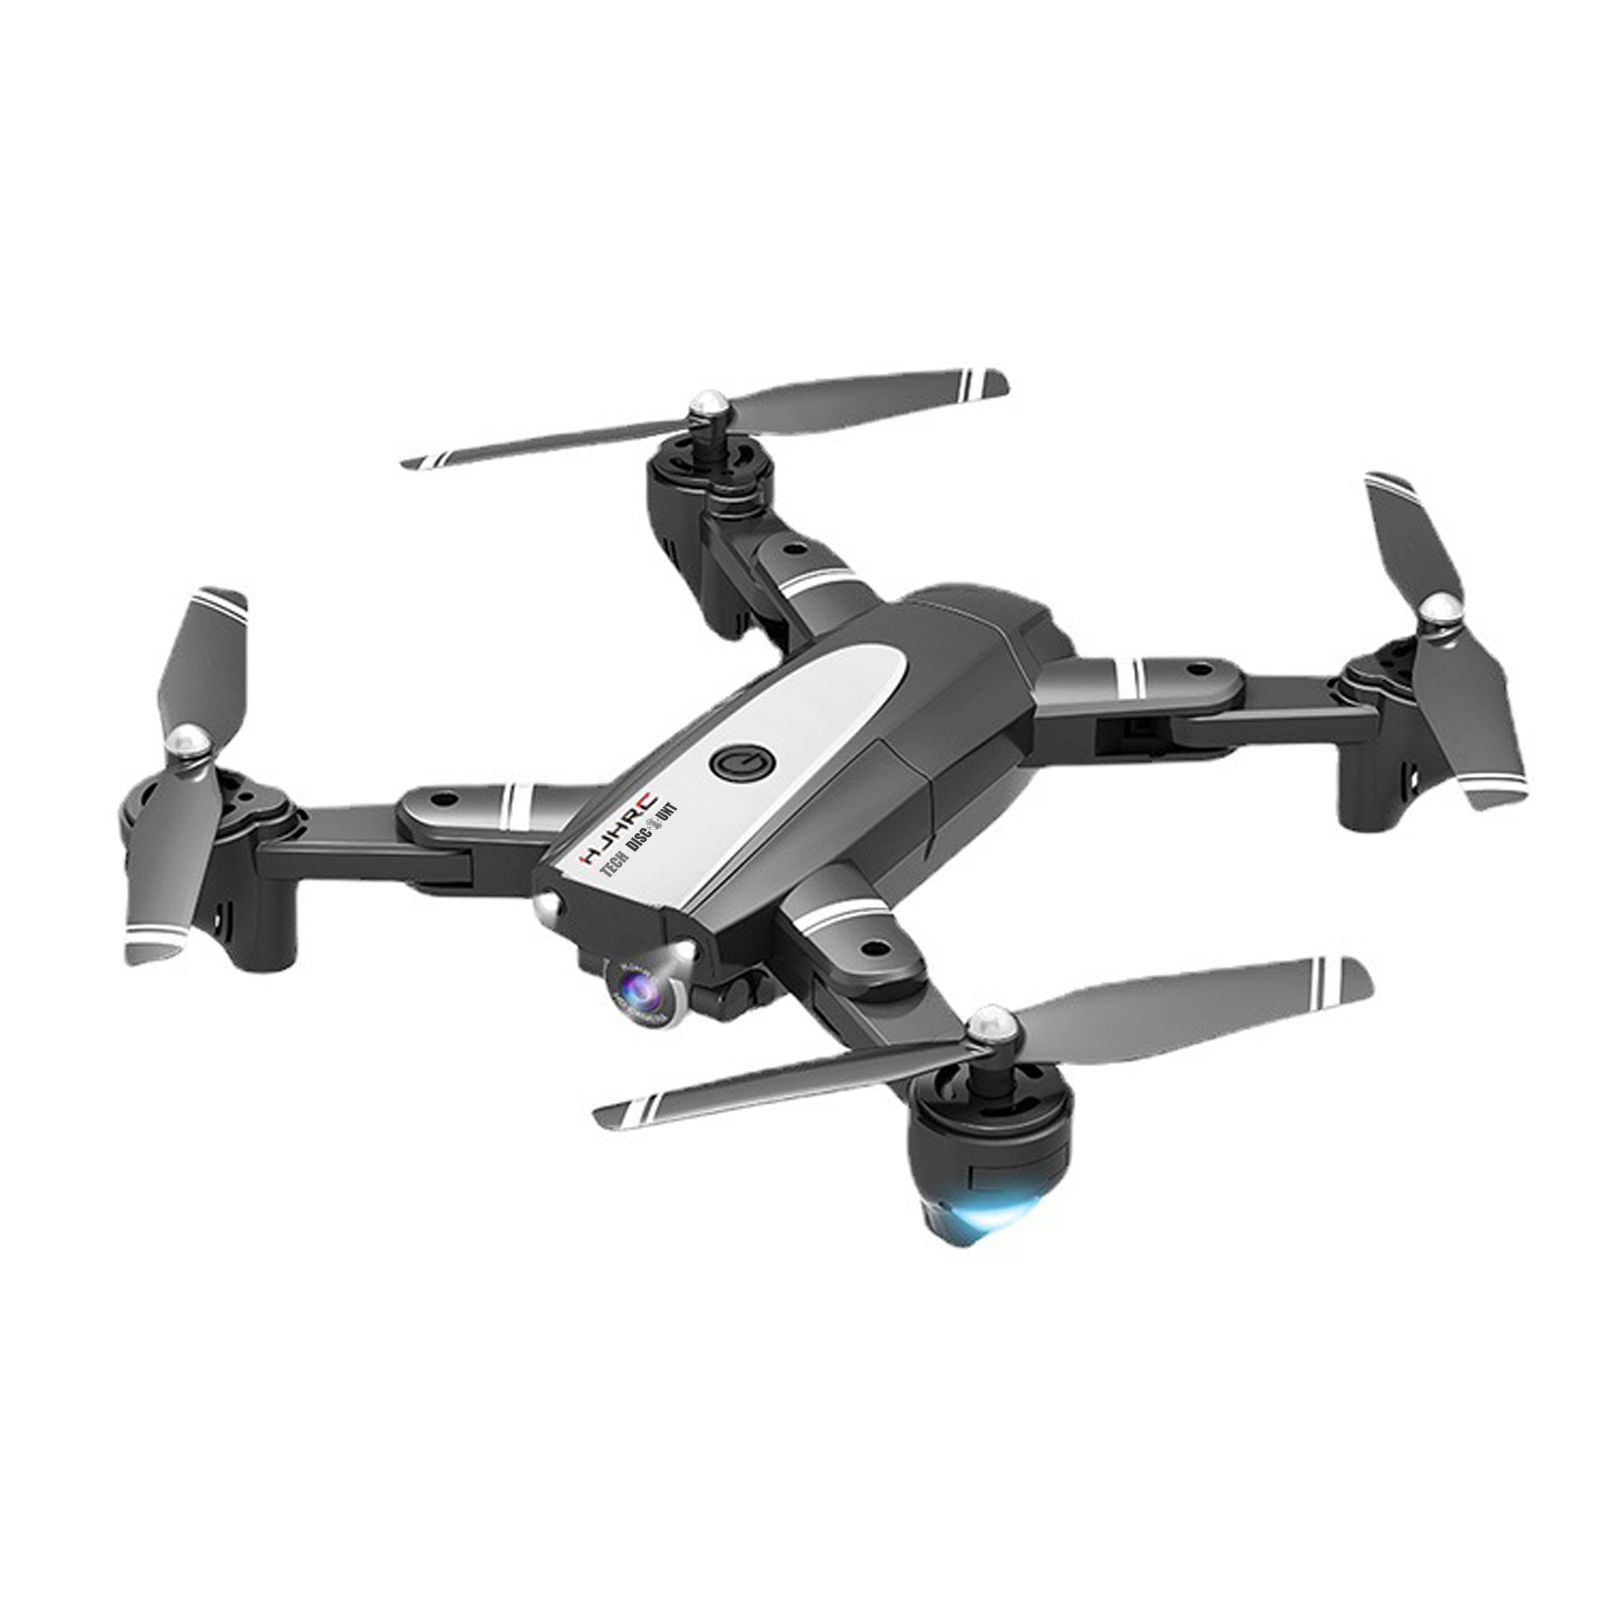 I® Drone 6K HD photographie aerienne quatre axes telecommand